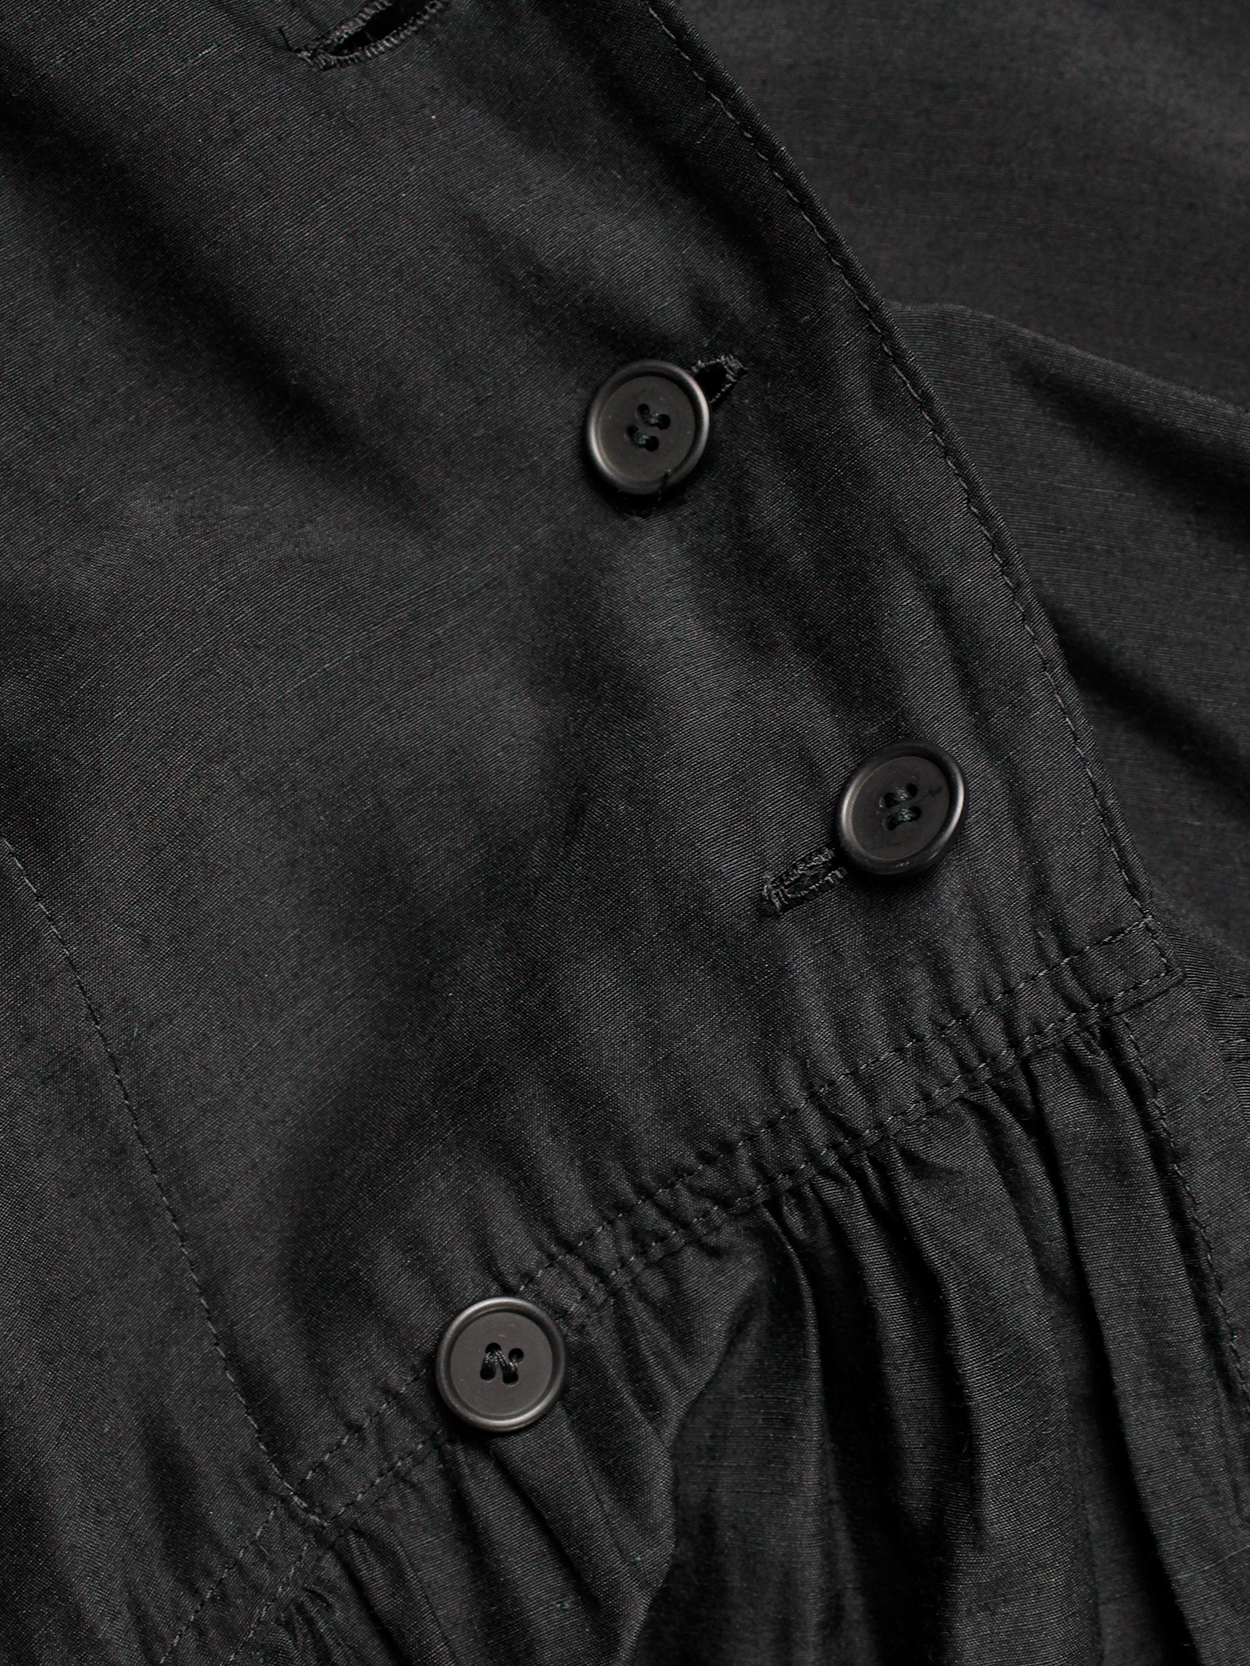 Y's Yohji Yamamoto black loose shirtdress with lapels — early 1980's ...